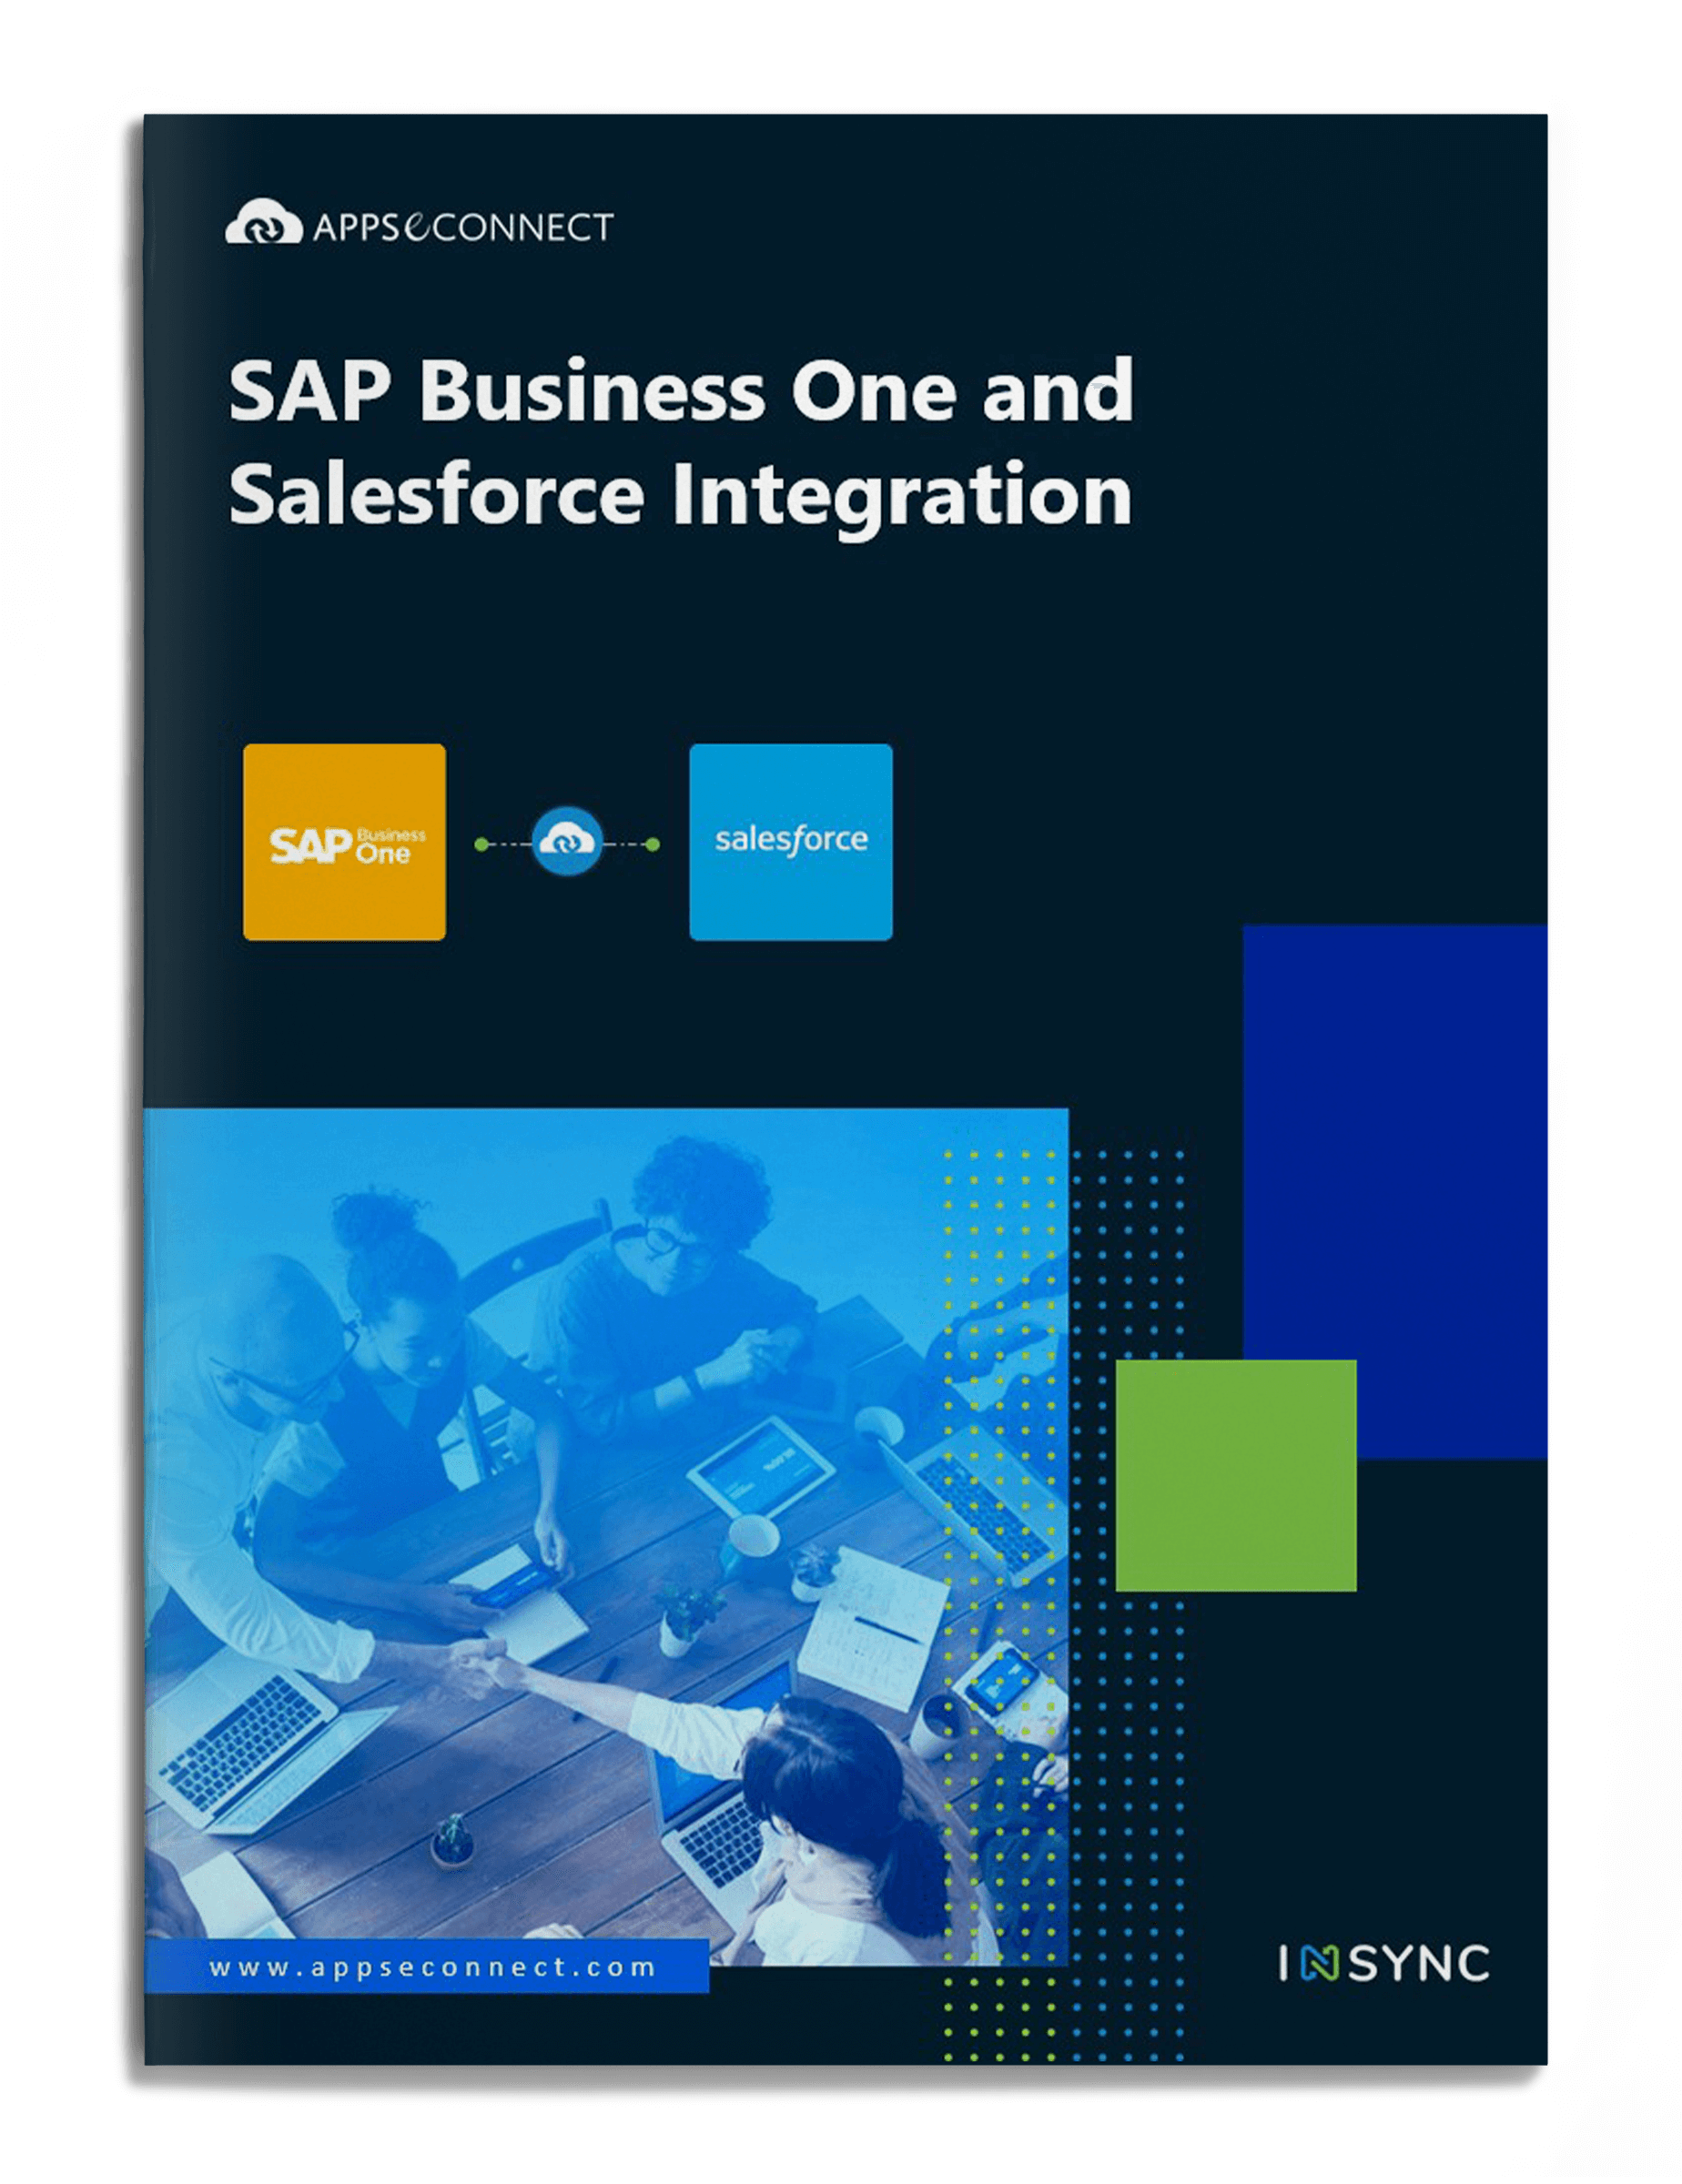 sap-business-one-saleforce-integration-brochure-cover